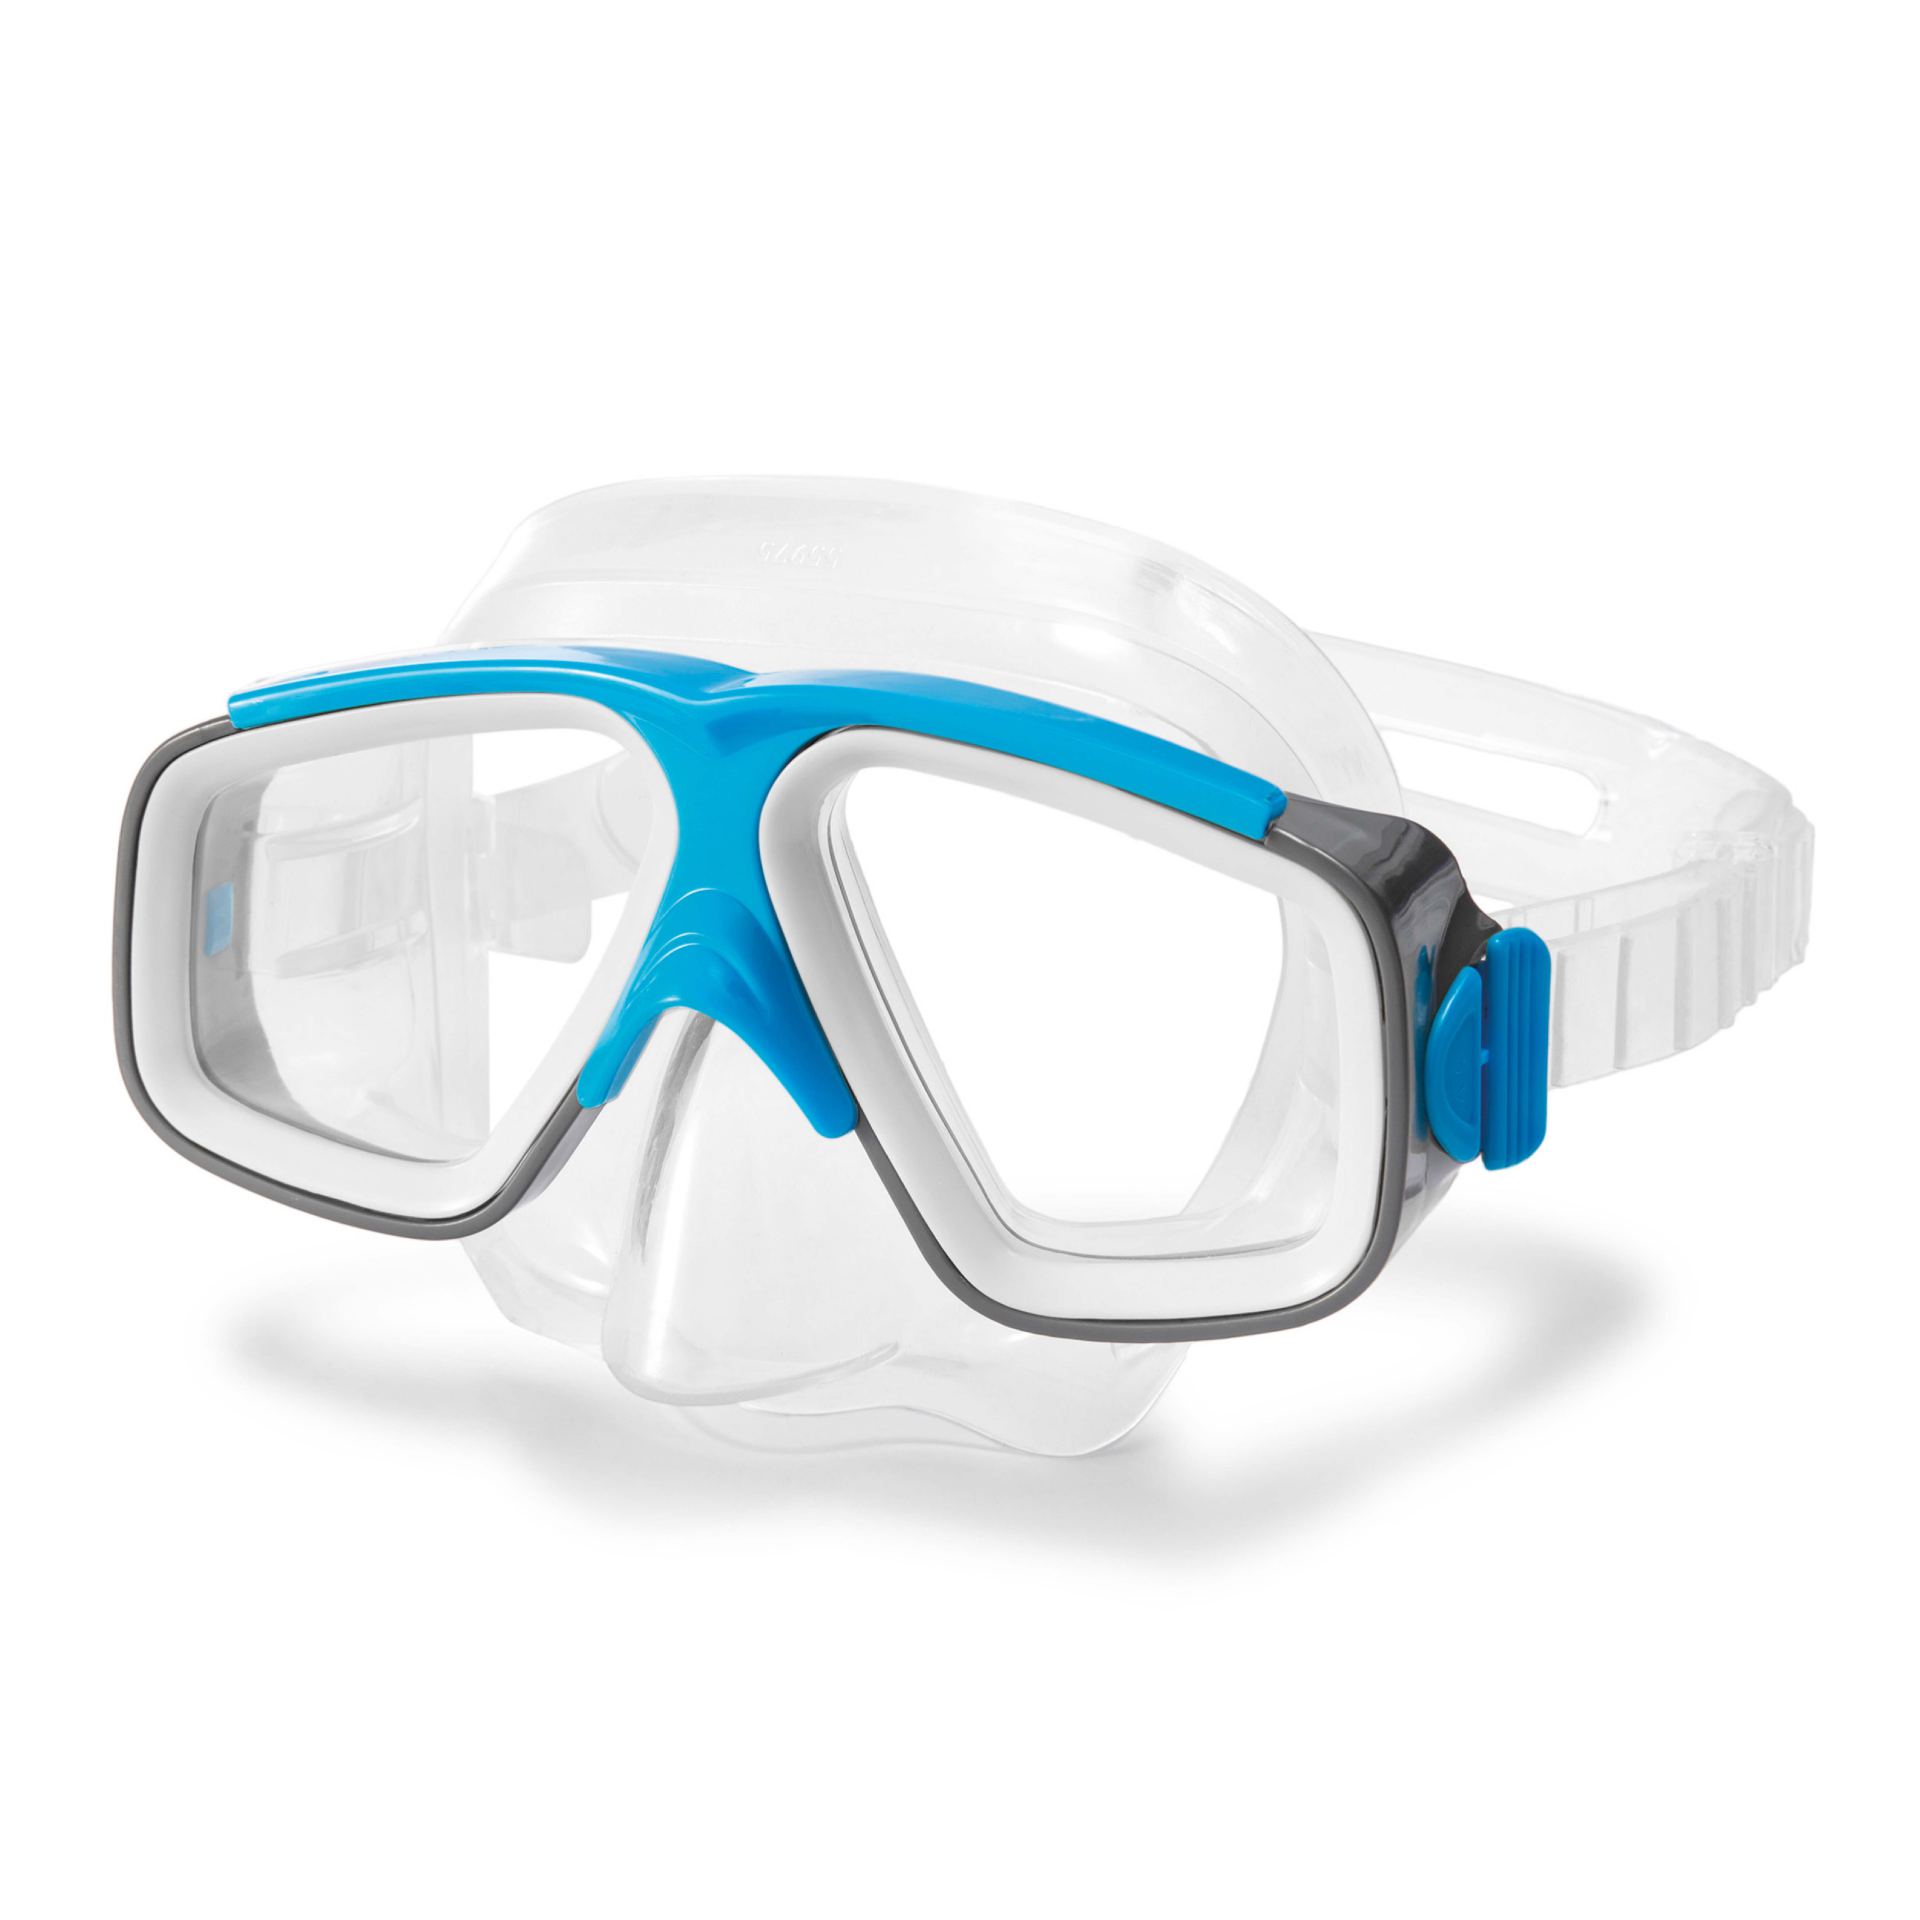 Intex surf rider masks - Blauw